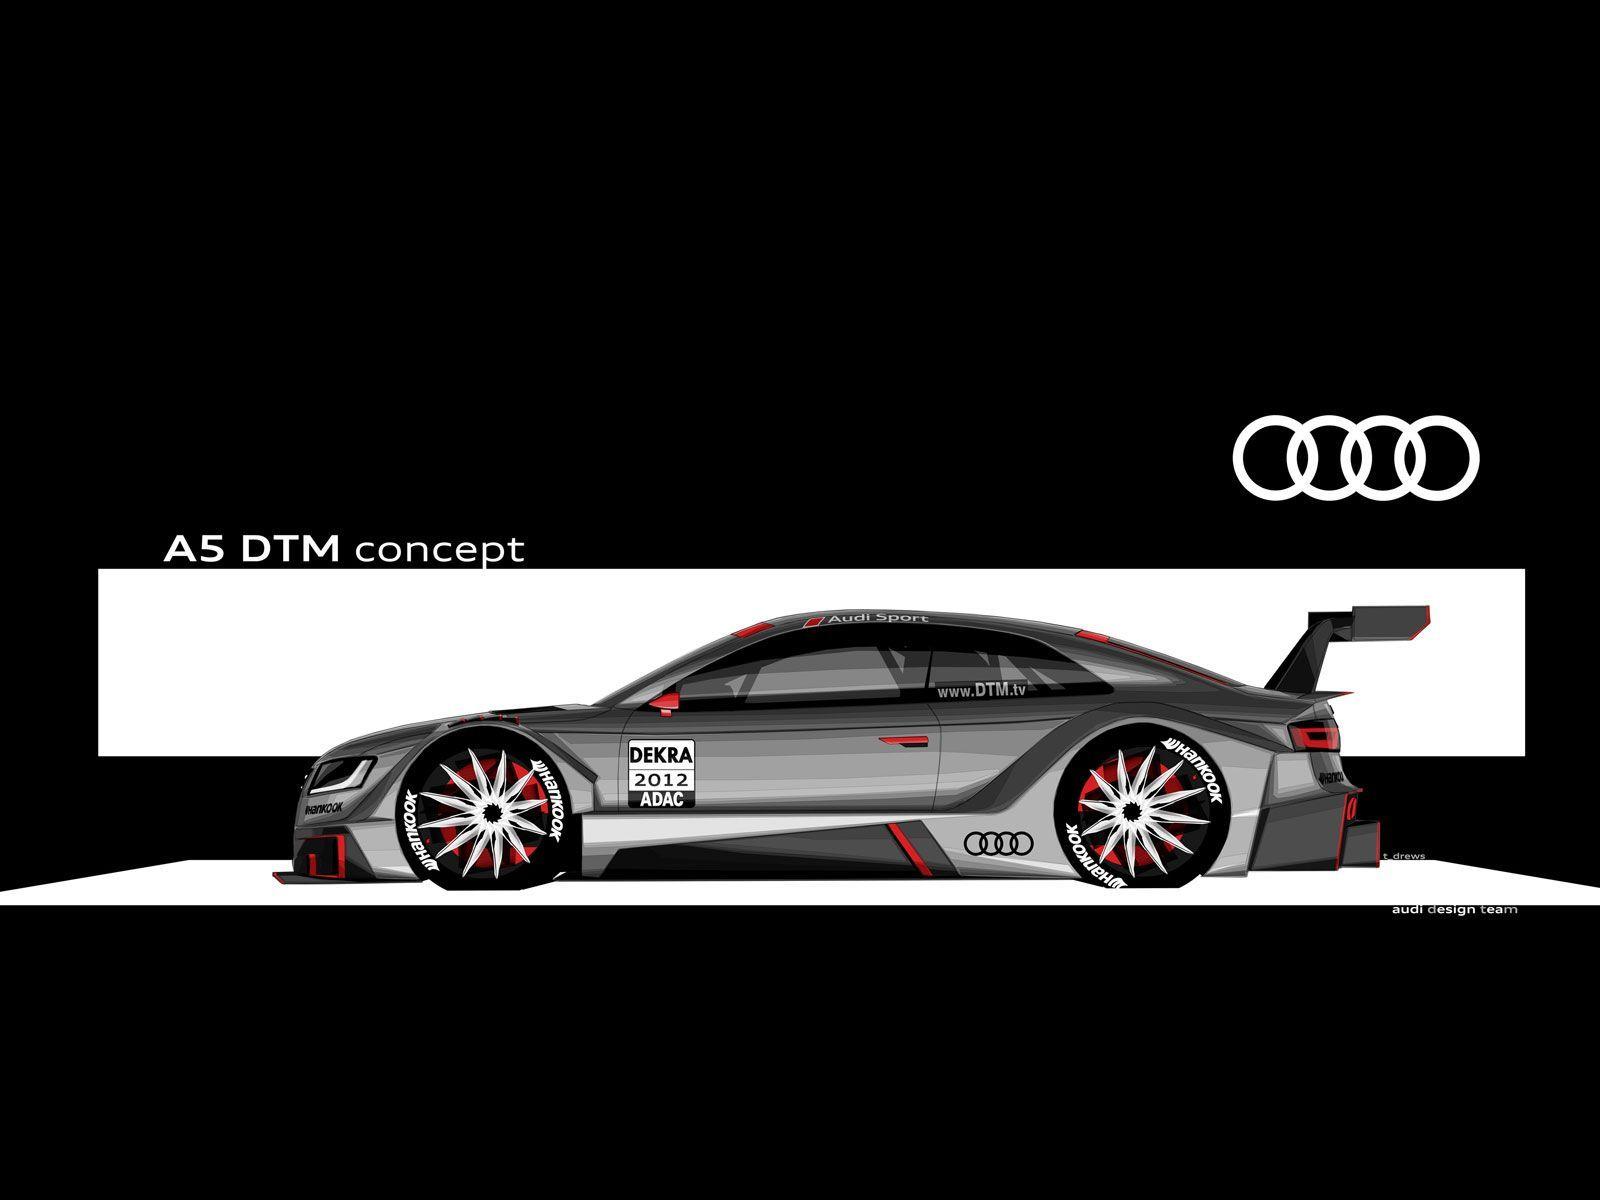 DTM 2012: Audi Banks on A5 Car Magazine